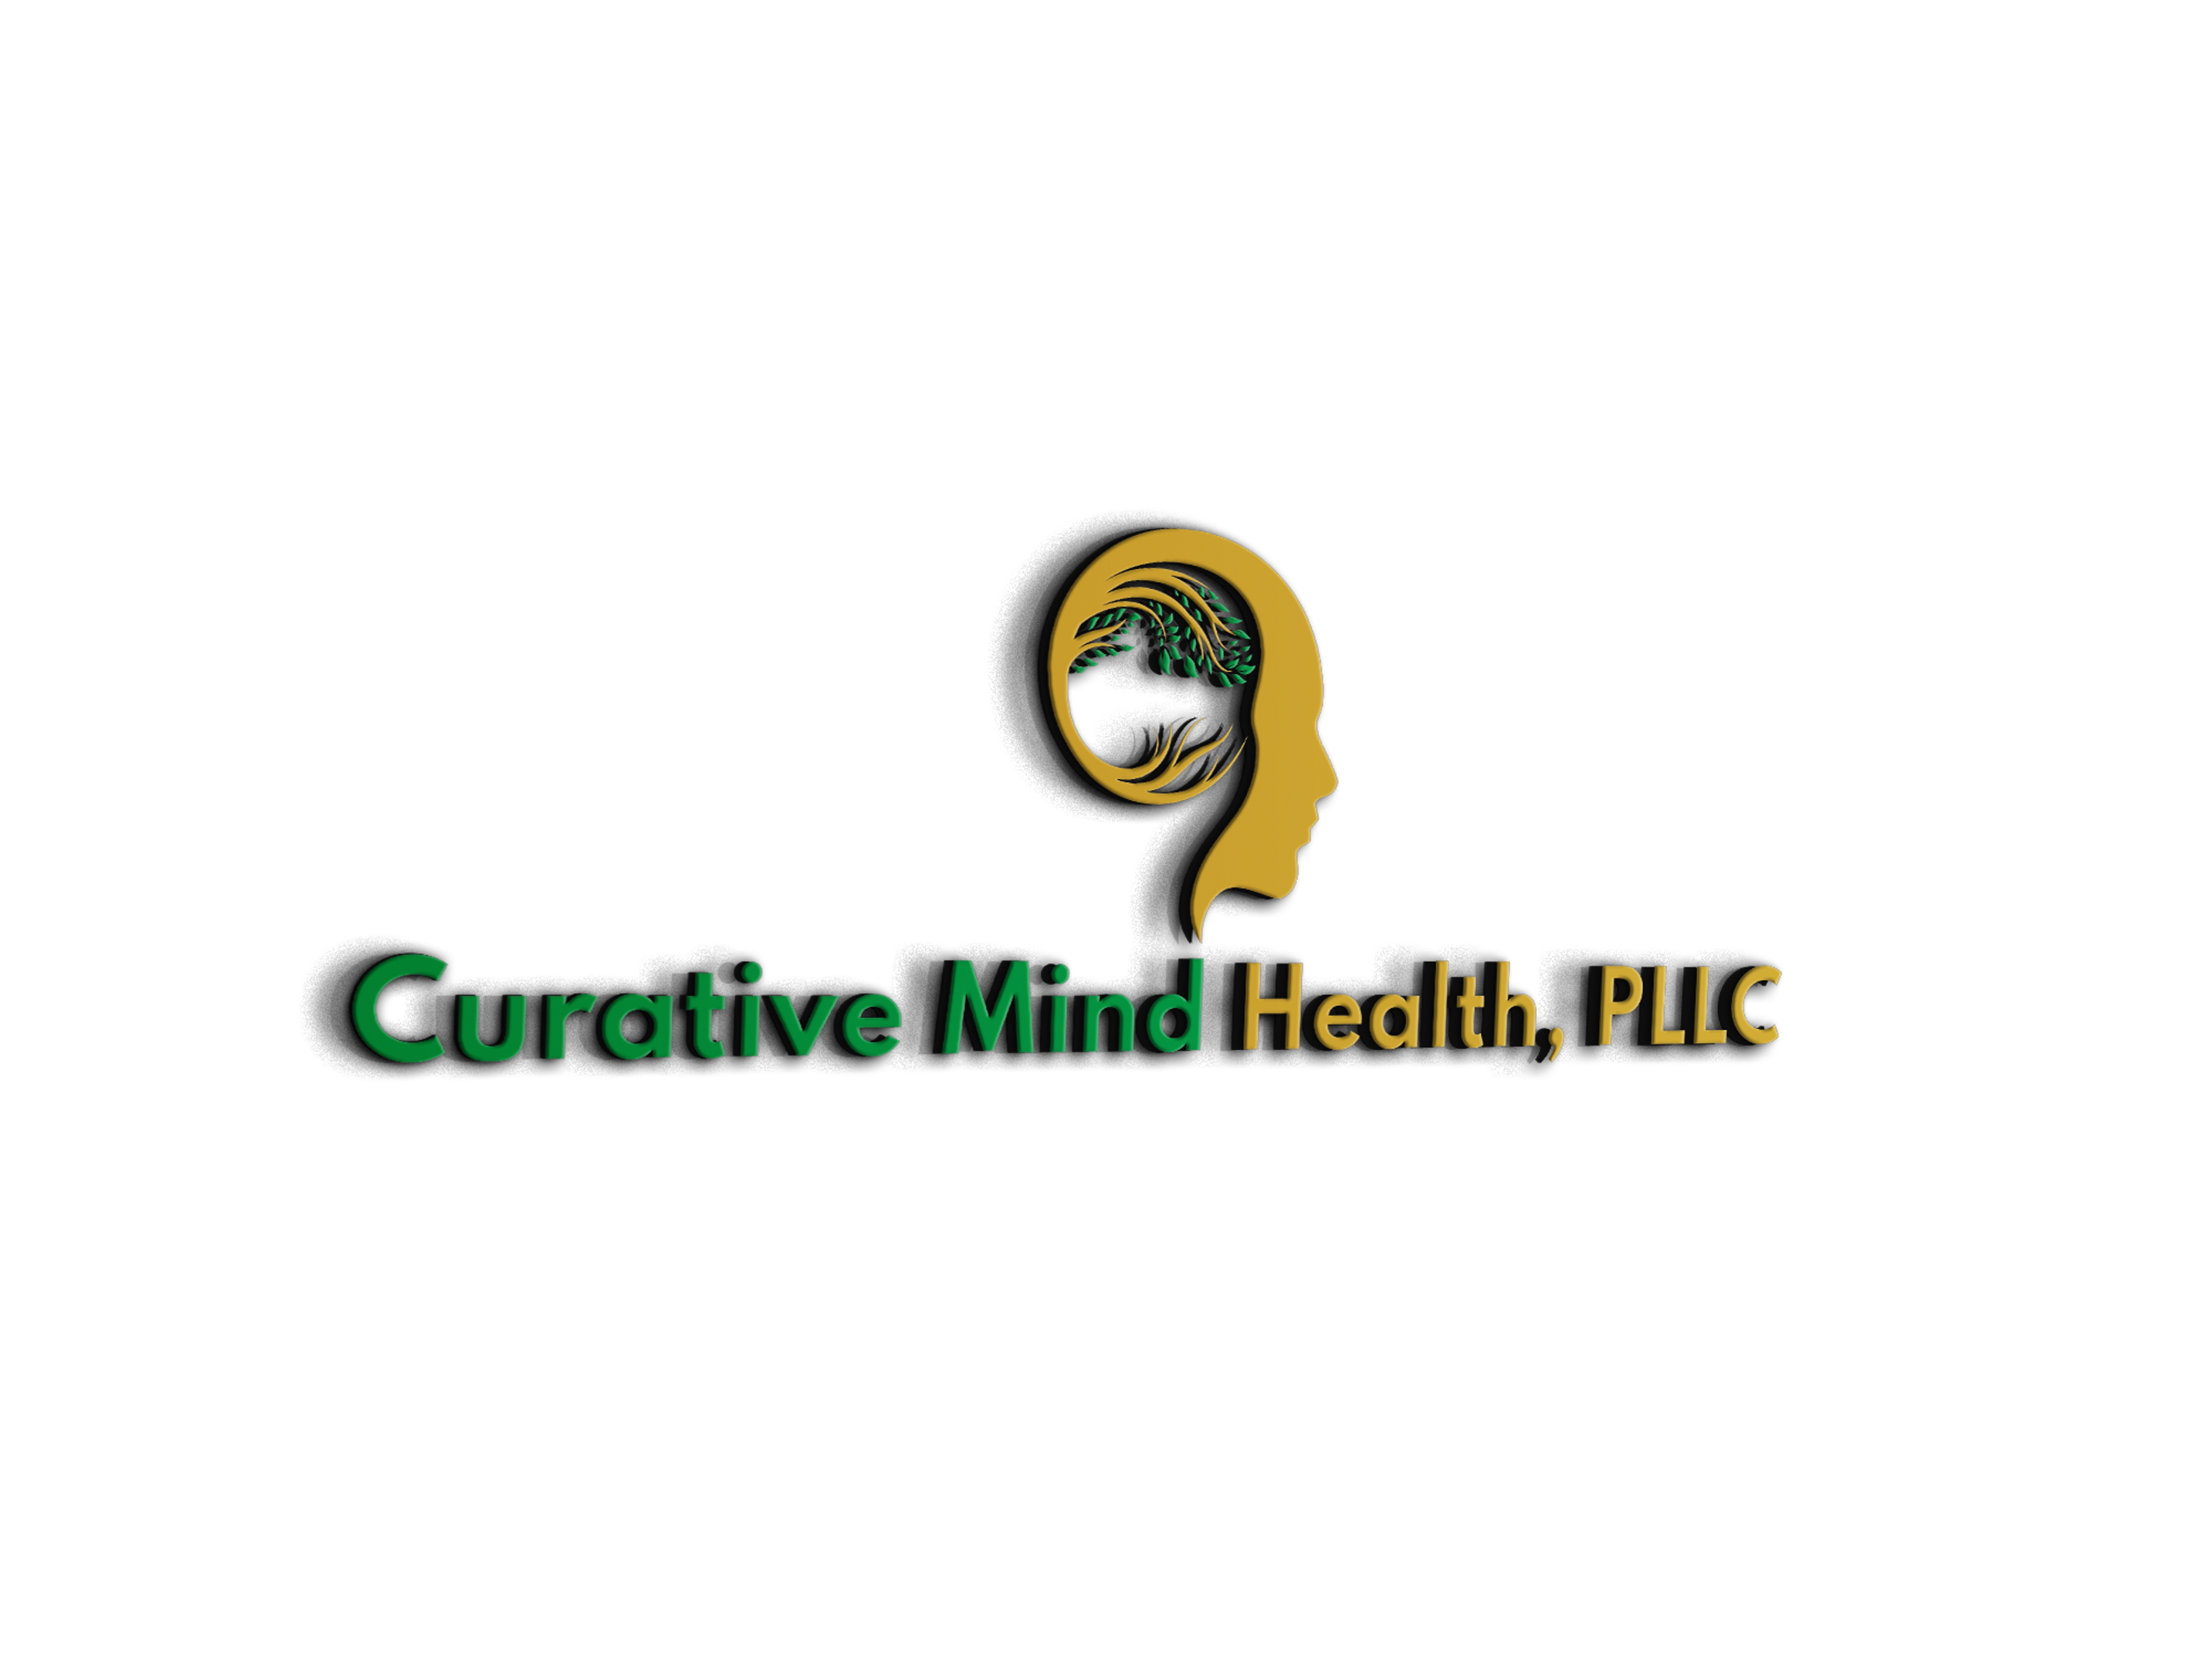 Curative Mind Health PLLC